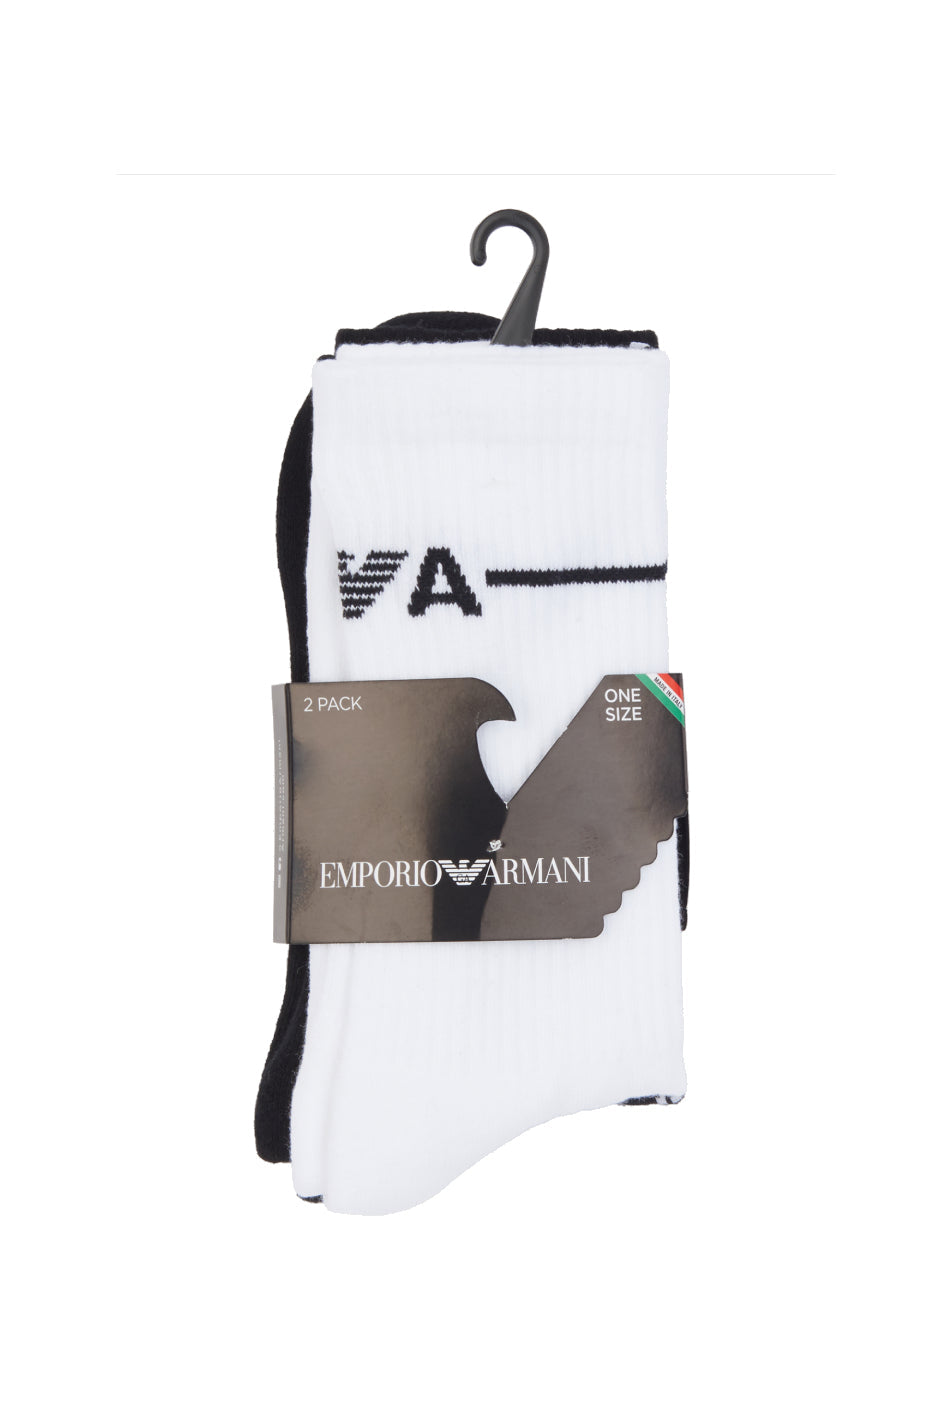 Emporio Armani 2 Pack Men's Knit Crew Sock